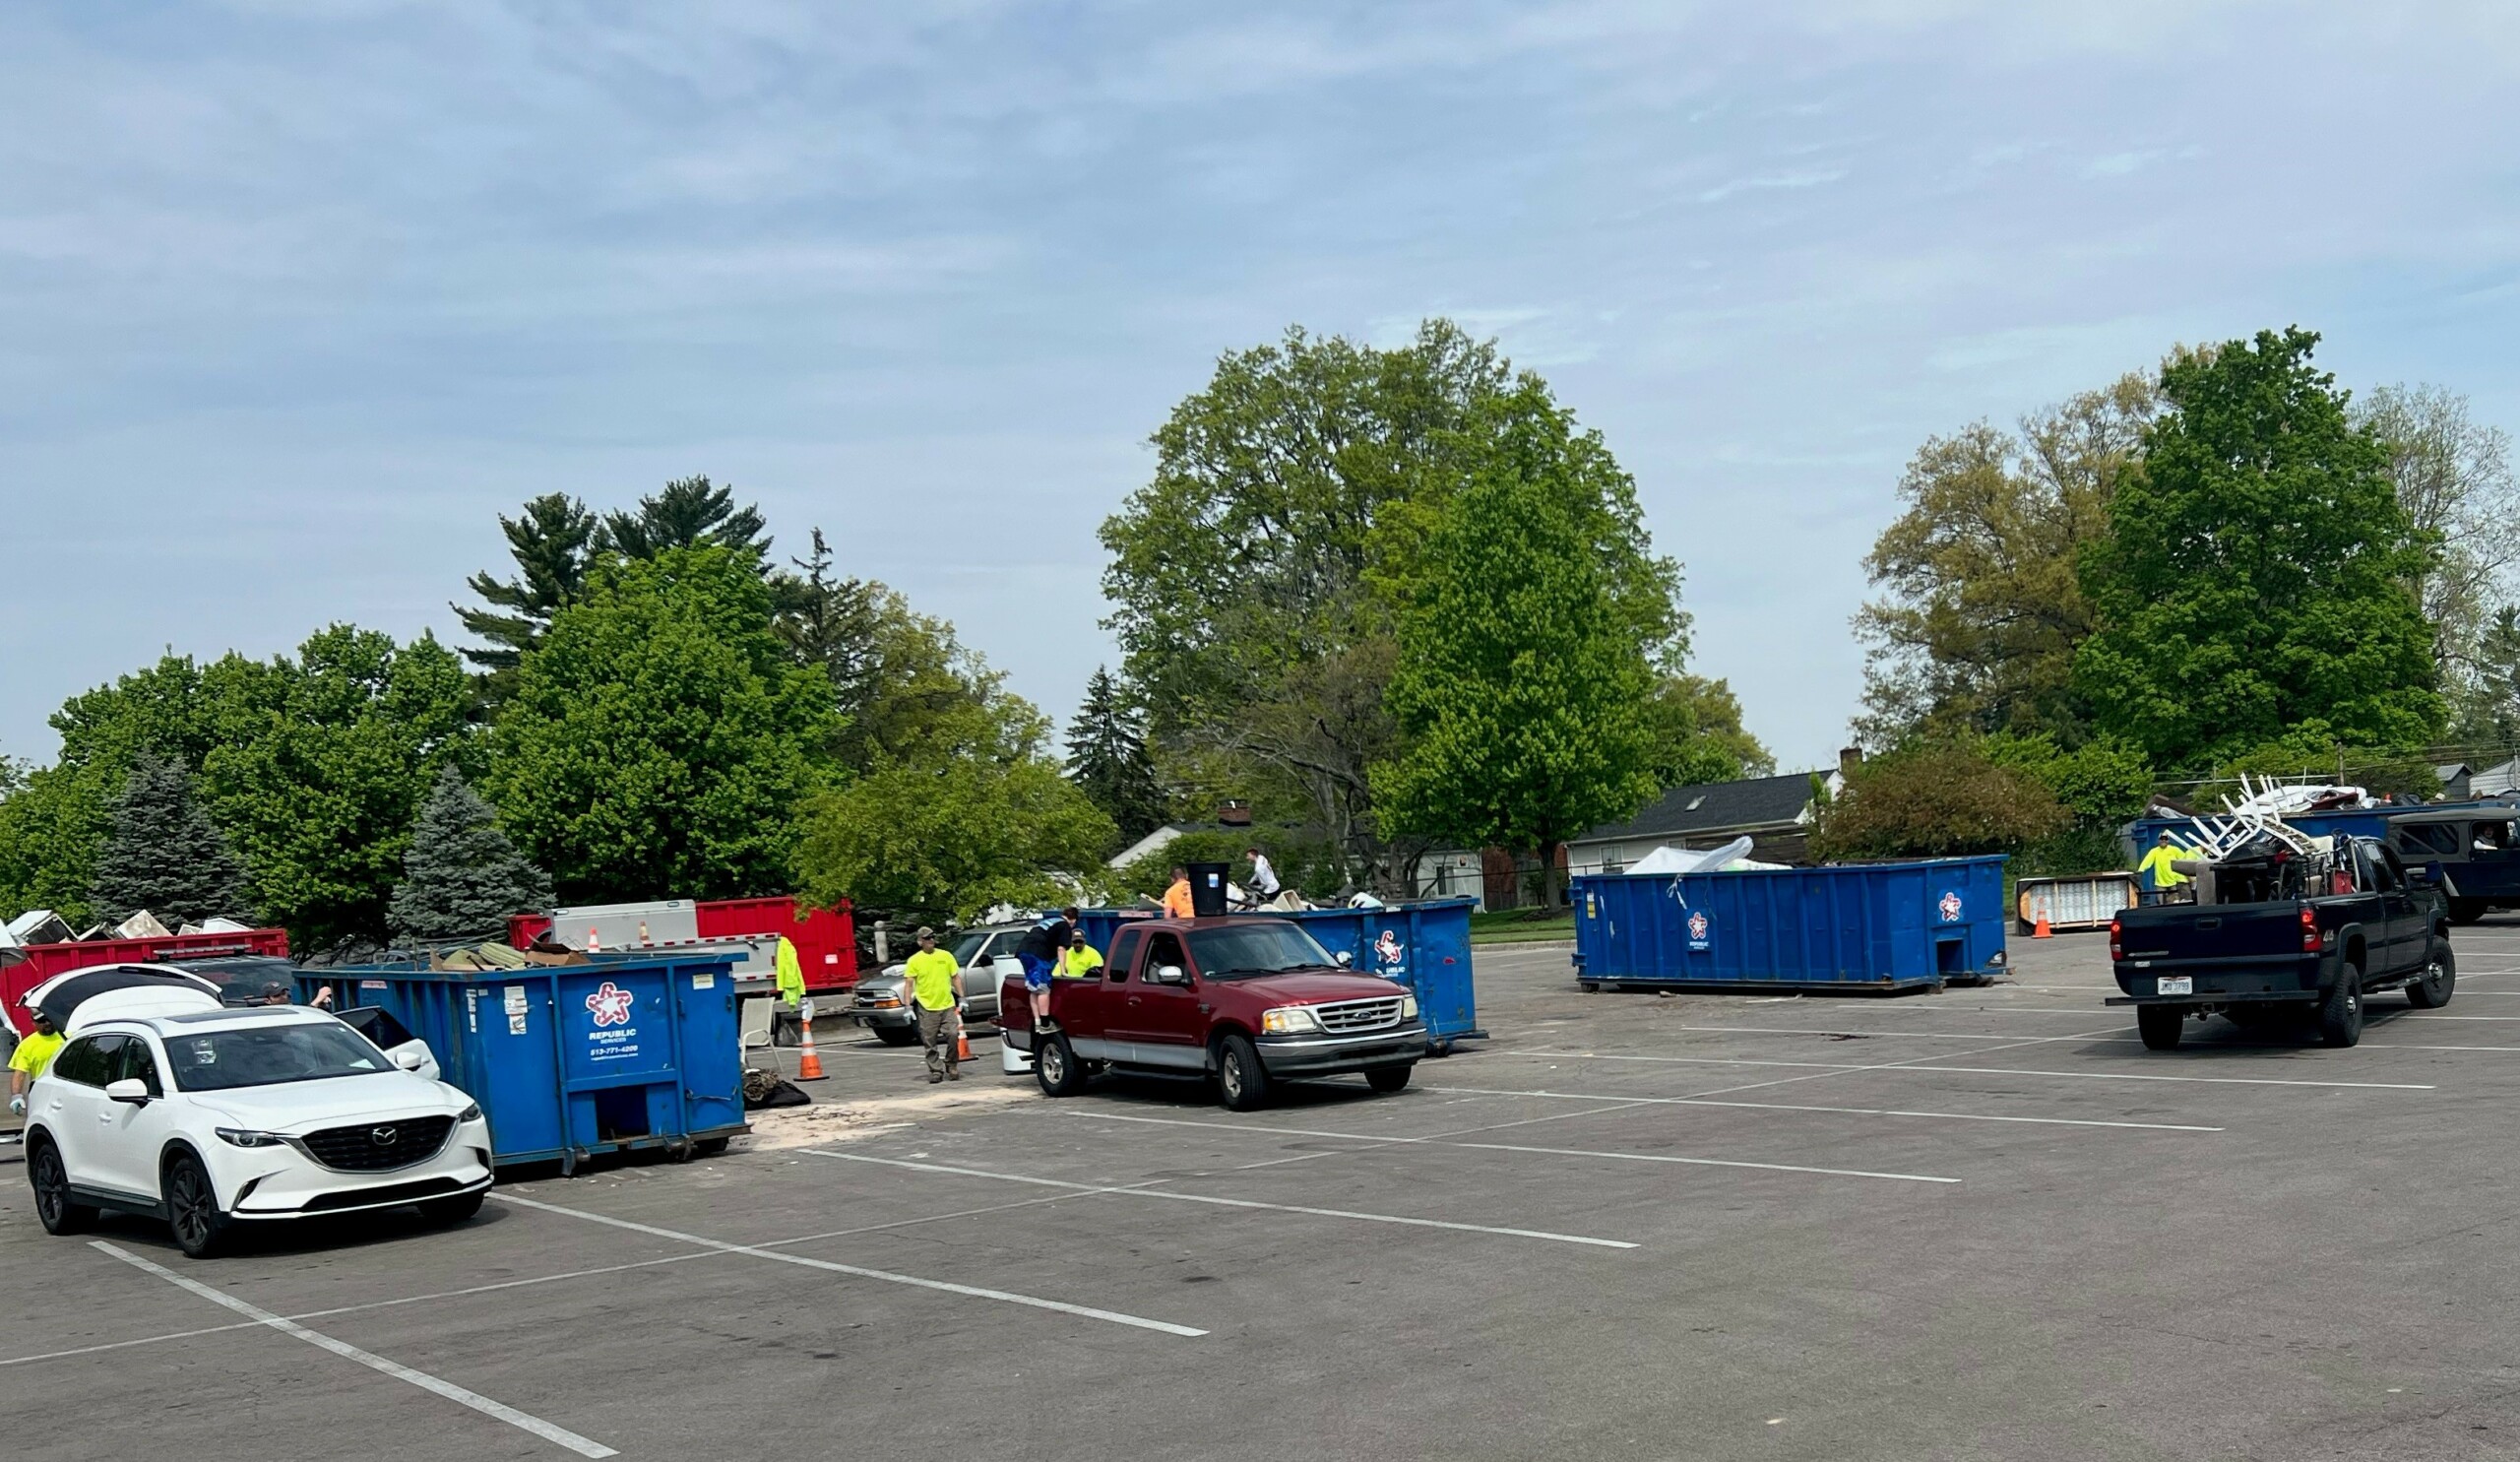 dumpsters and cars unloading at trash bash